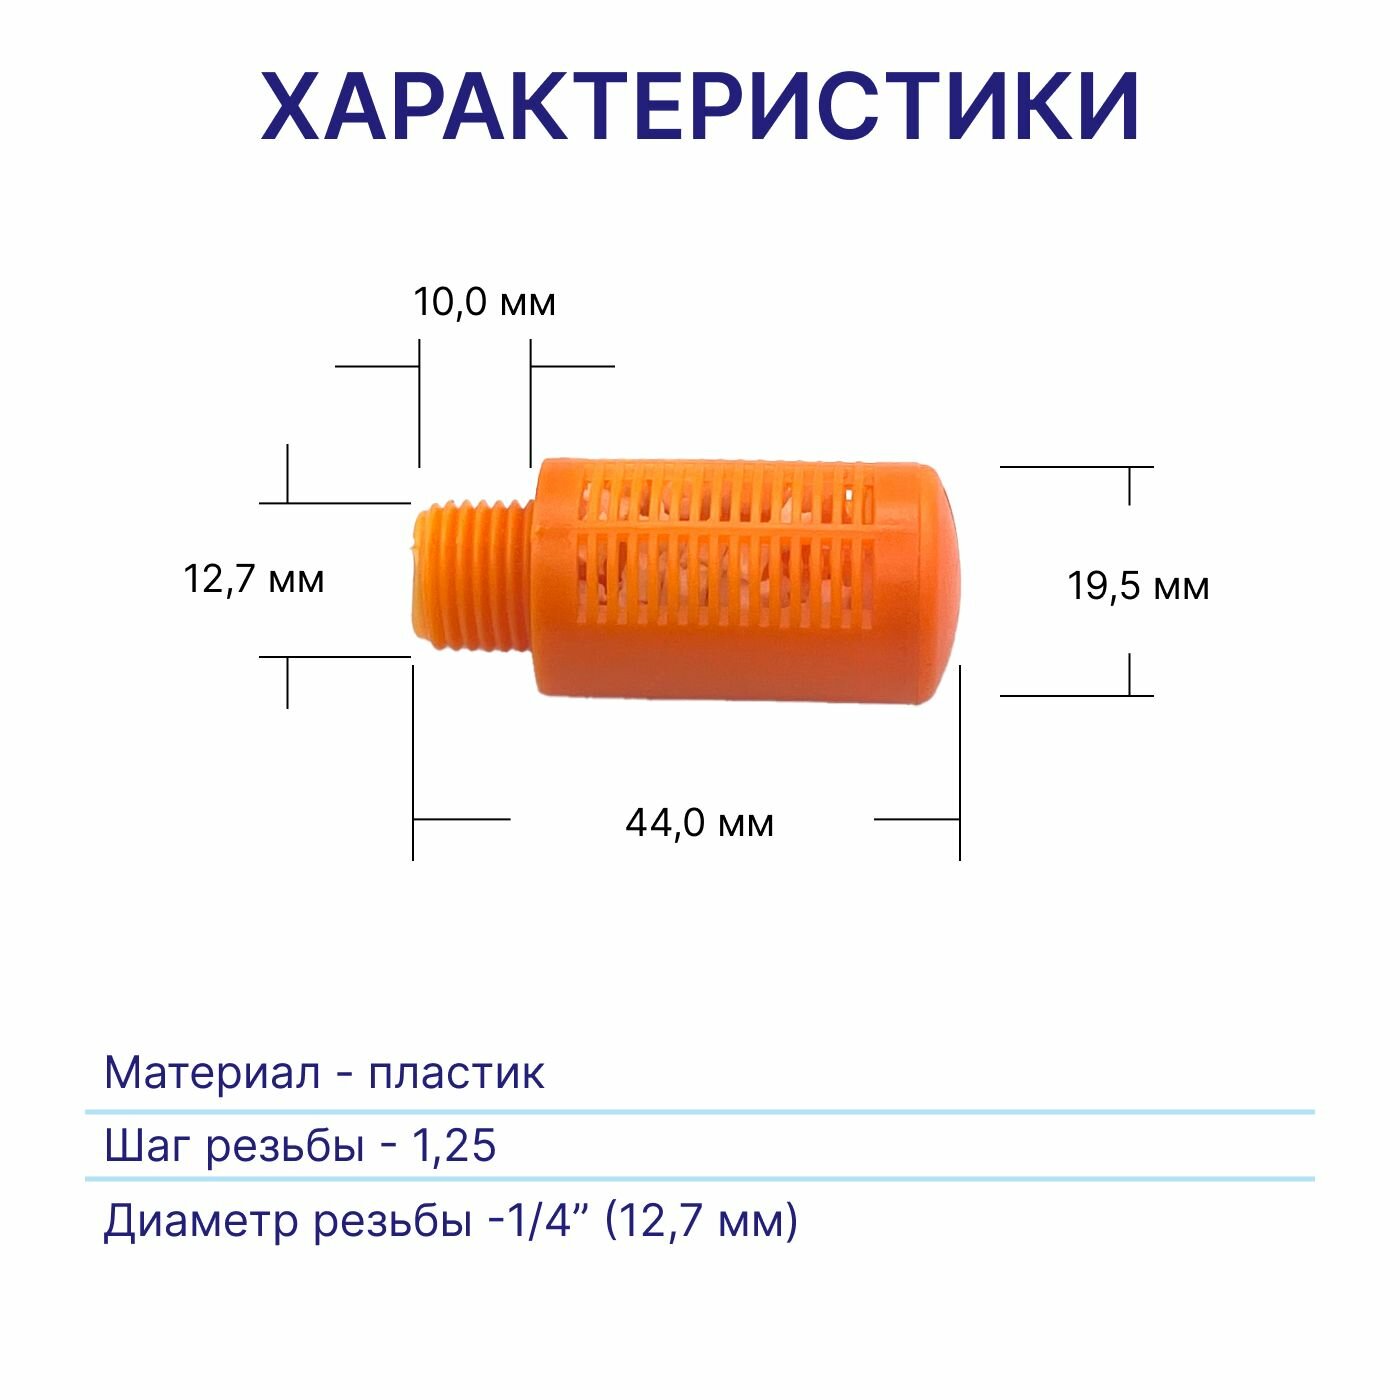 Сапун для компрессора R1/4 (127  шаг резьбы 125) Komprem оранжевый